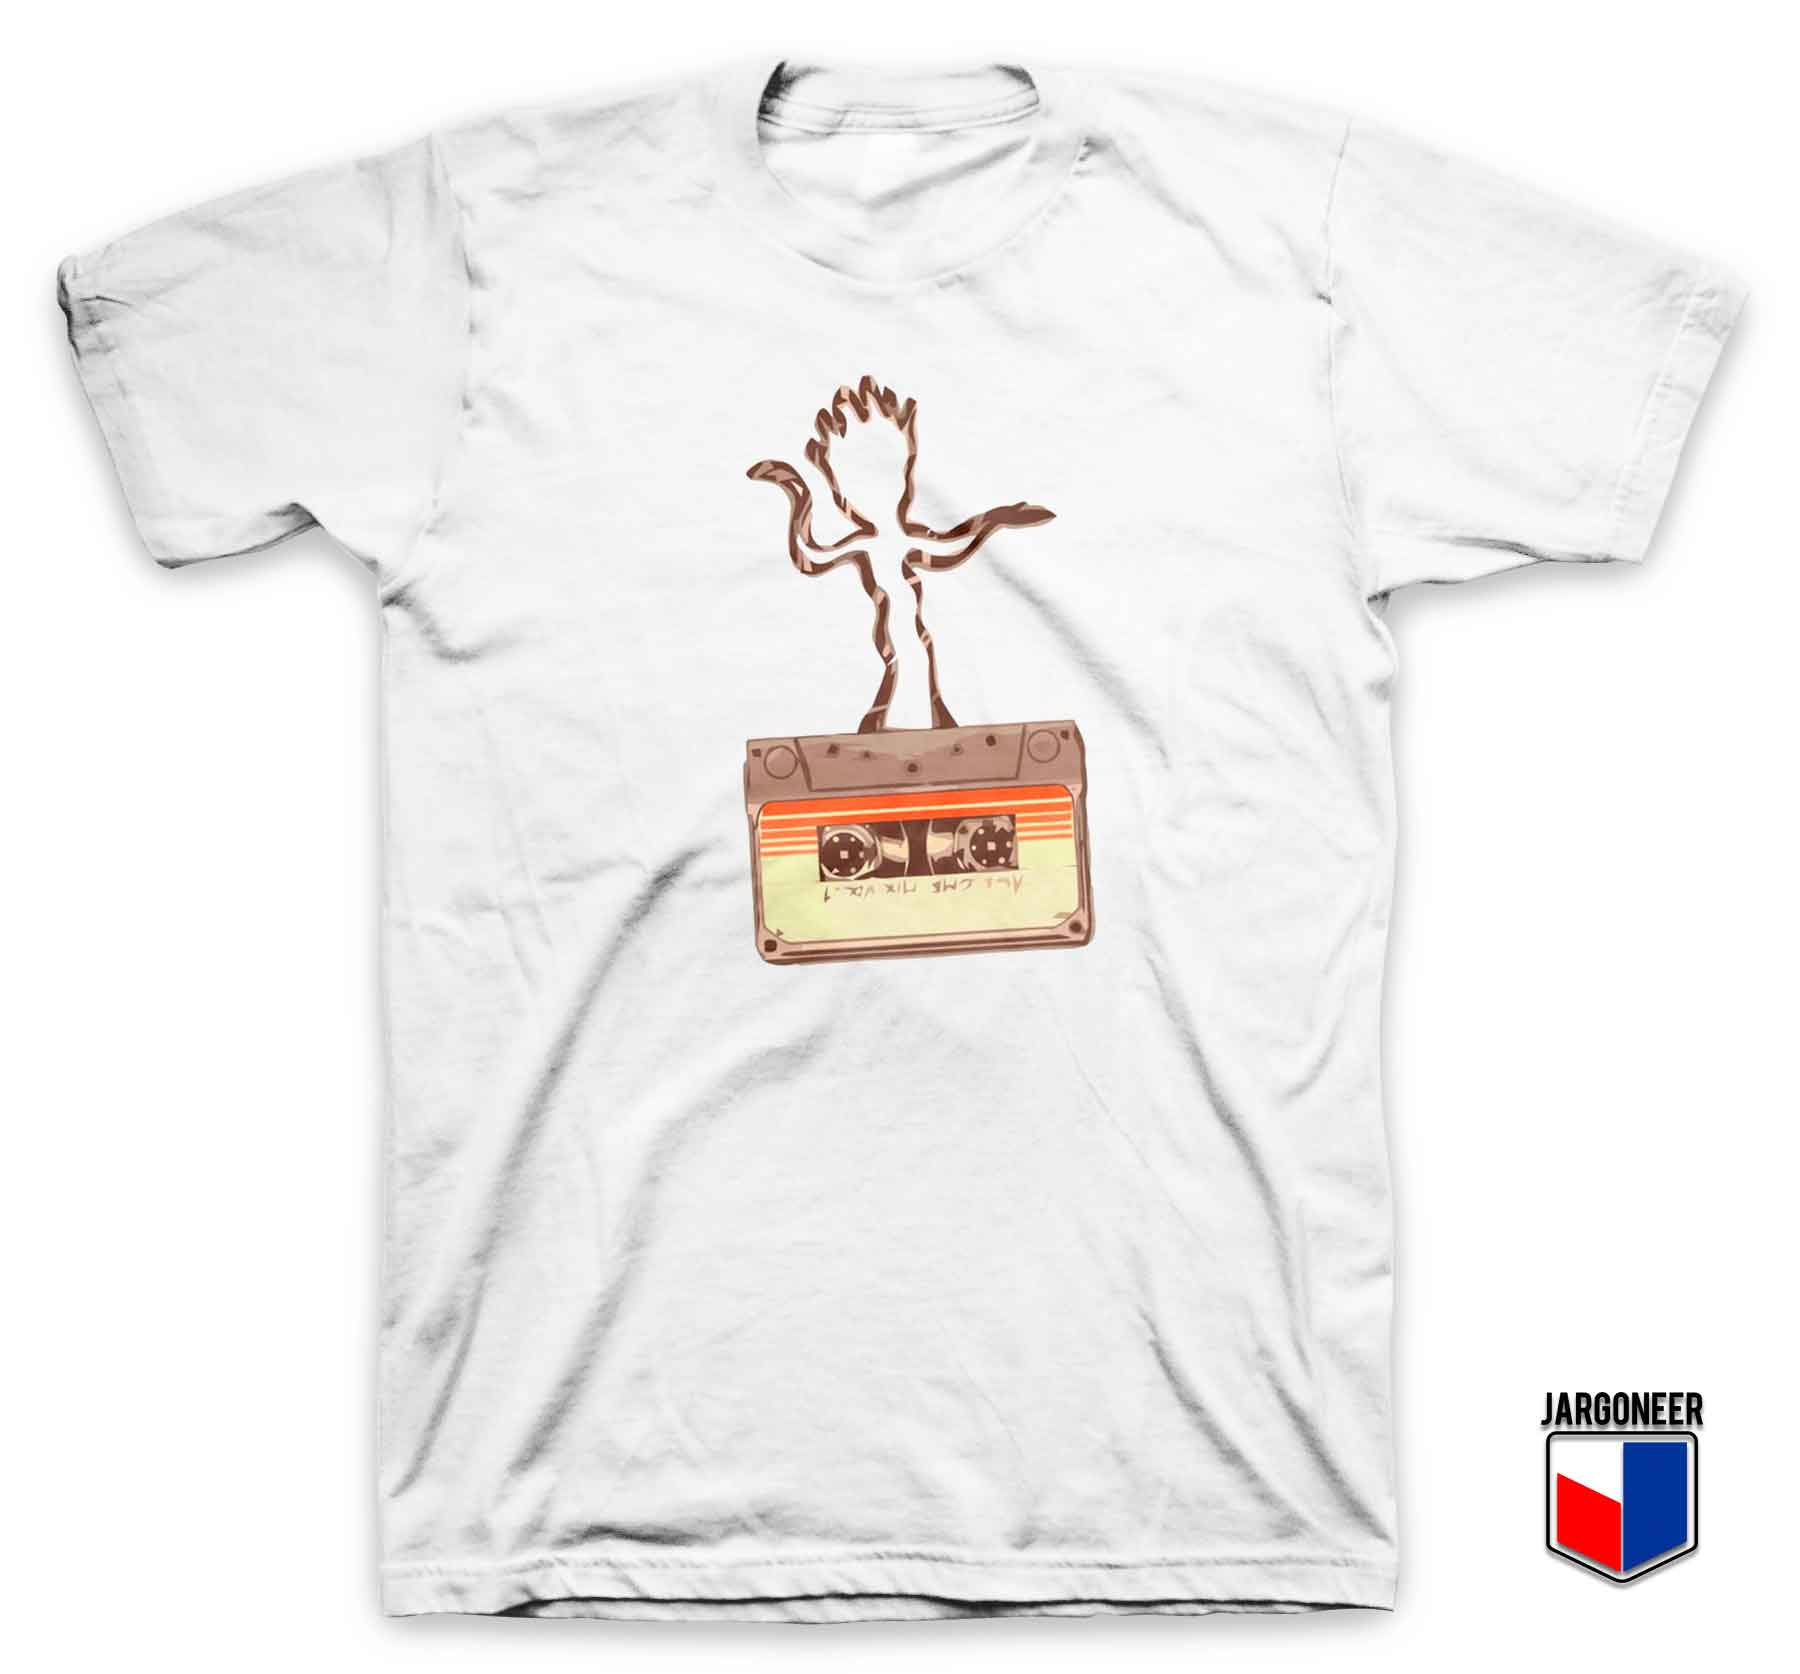 Cool Ooga Chaka T Shirt - Custom Design By jargoneer.com